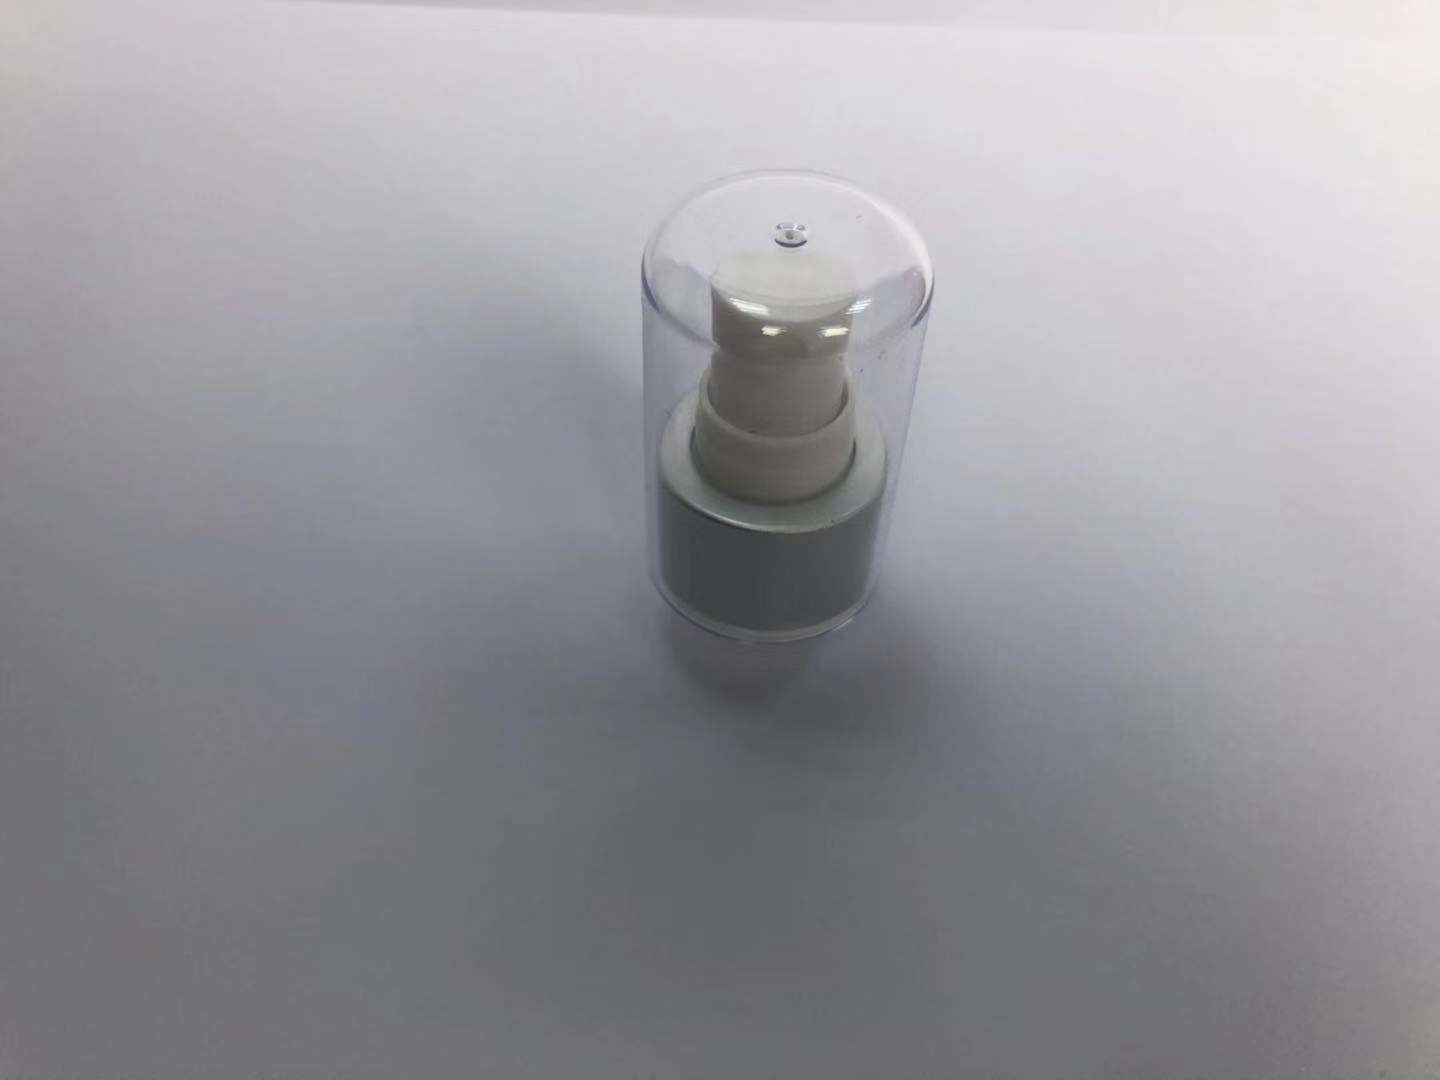 Silver Closure Upscale Cream Pump Dispenser For Personal Care Products